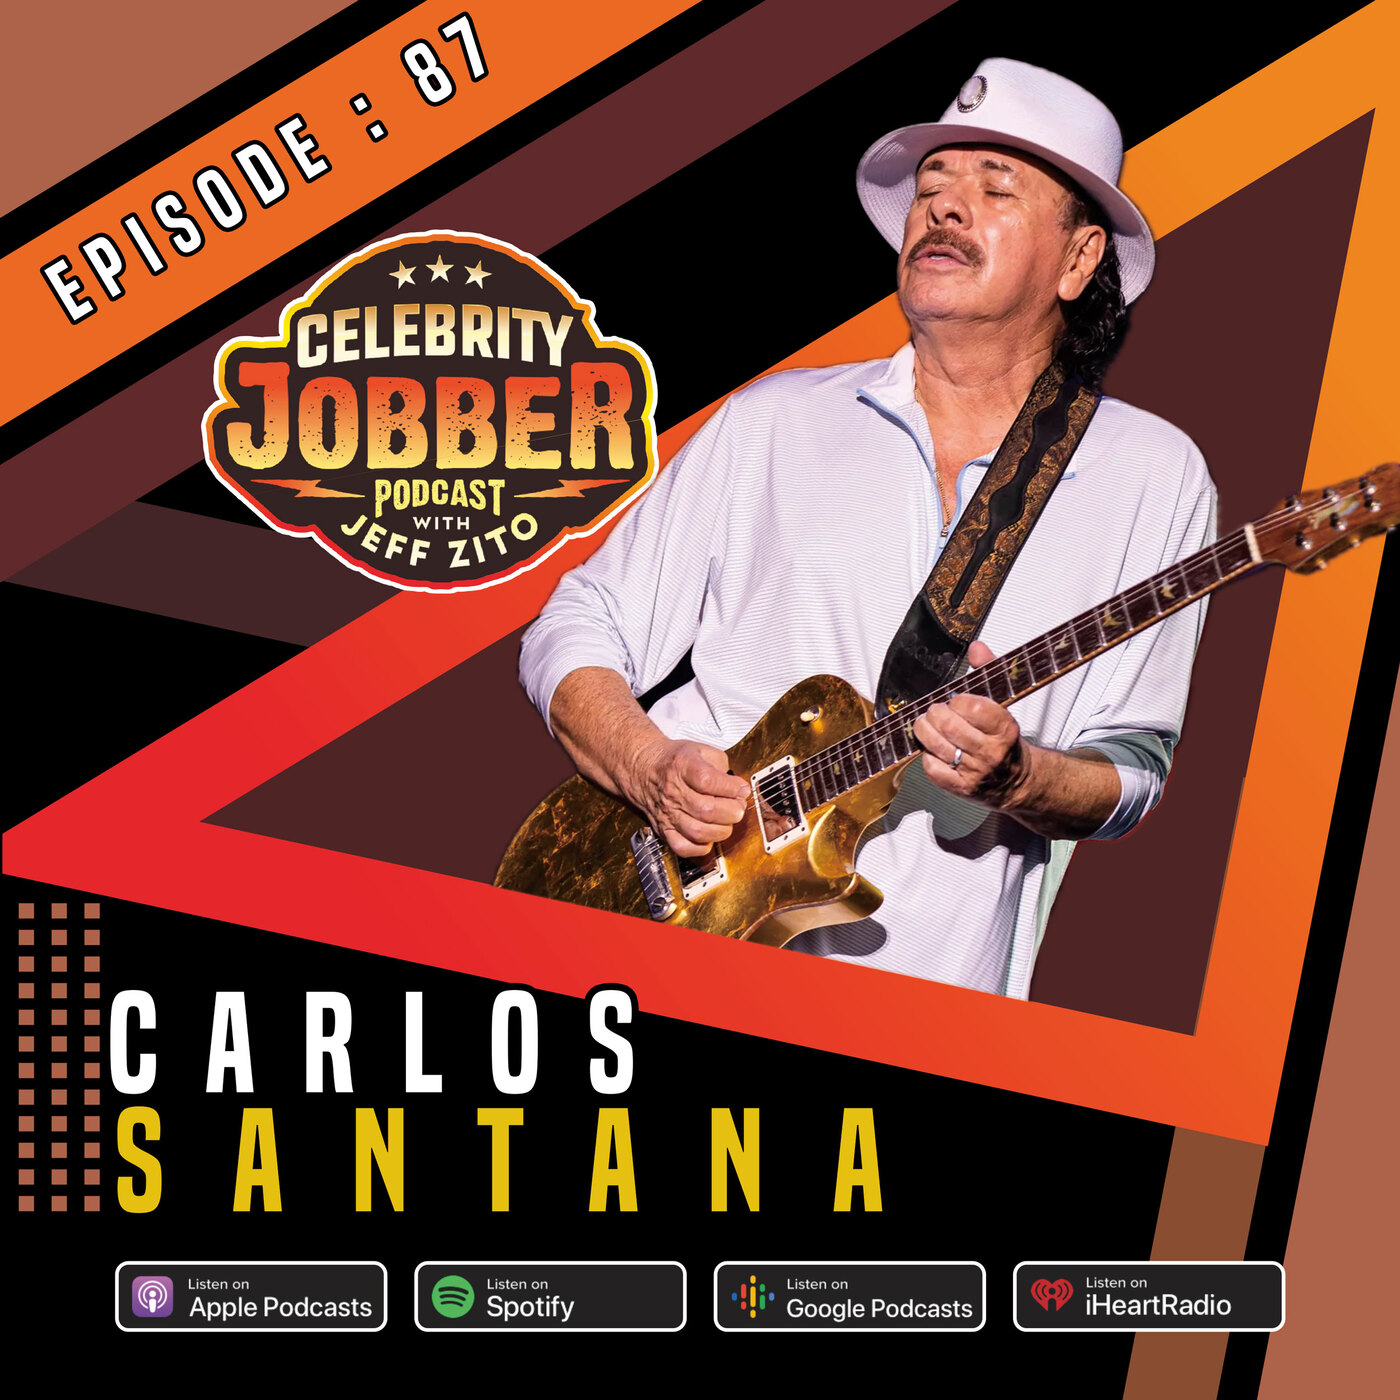 Celebrity Jobber with Jeff Zito - Carlos Santana